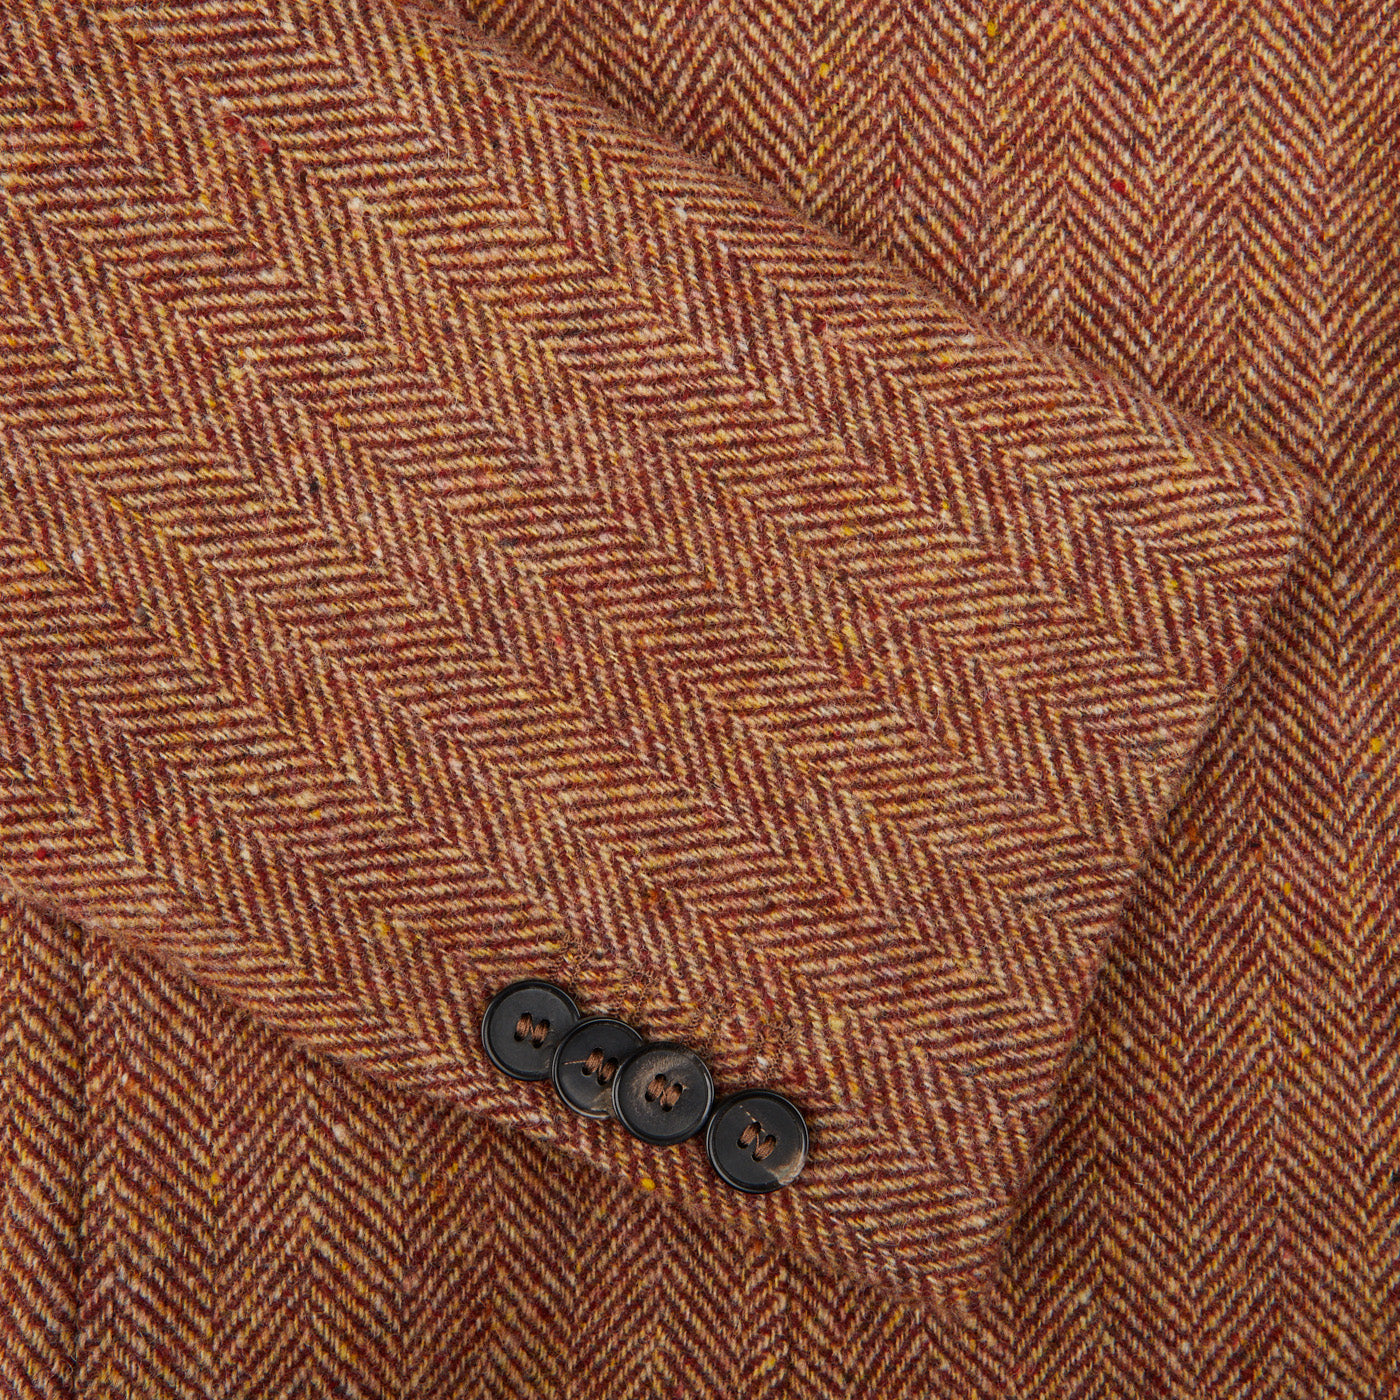 A close up of an Orange Herringbone Wool Tweed Blazer made by Studio 73.